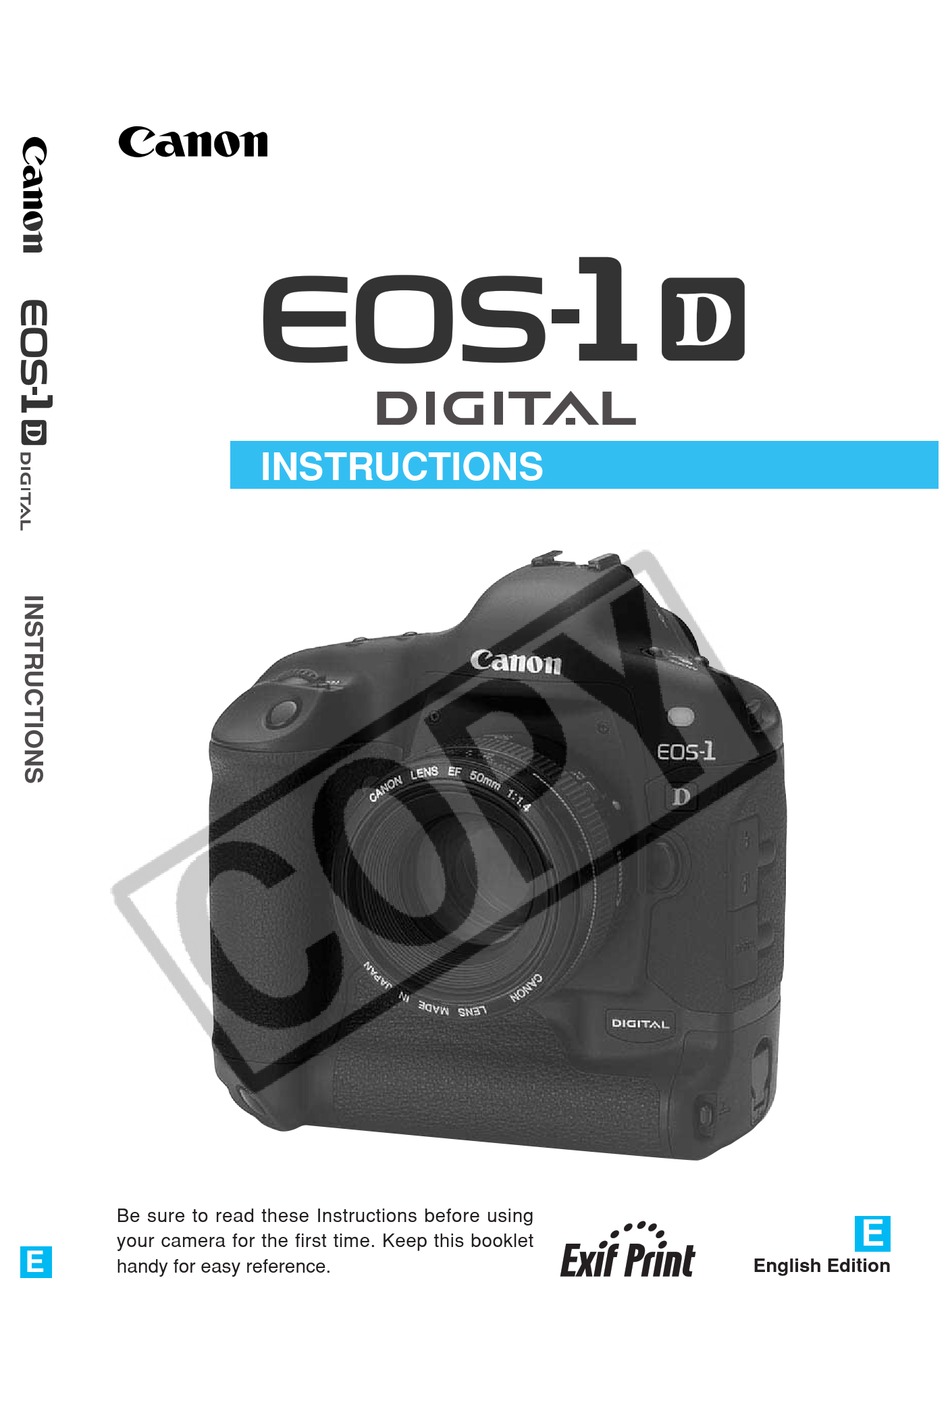 CANON EOS 1D DIGITAL CAMERA INSTRUCTIONS MANUAL | ManualsLib